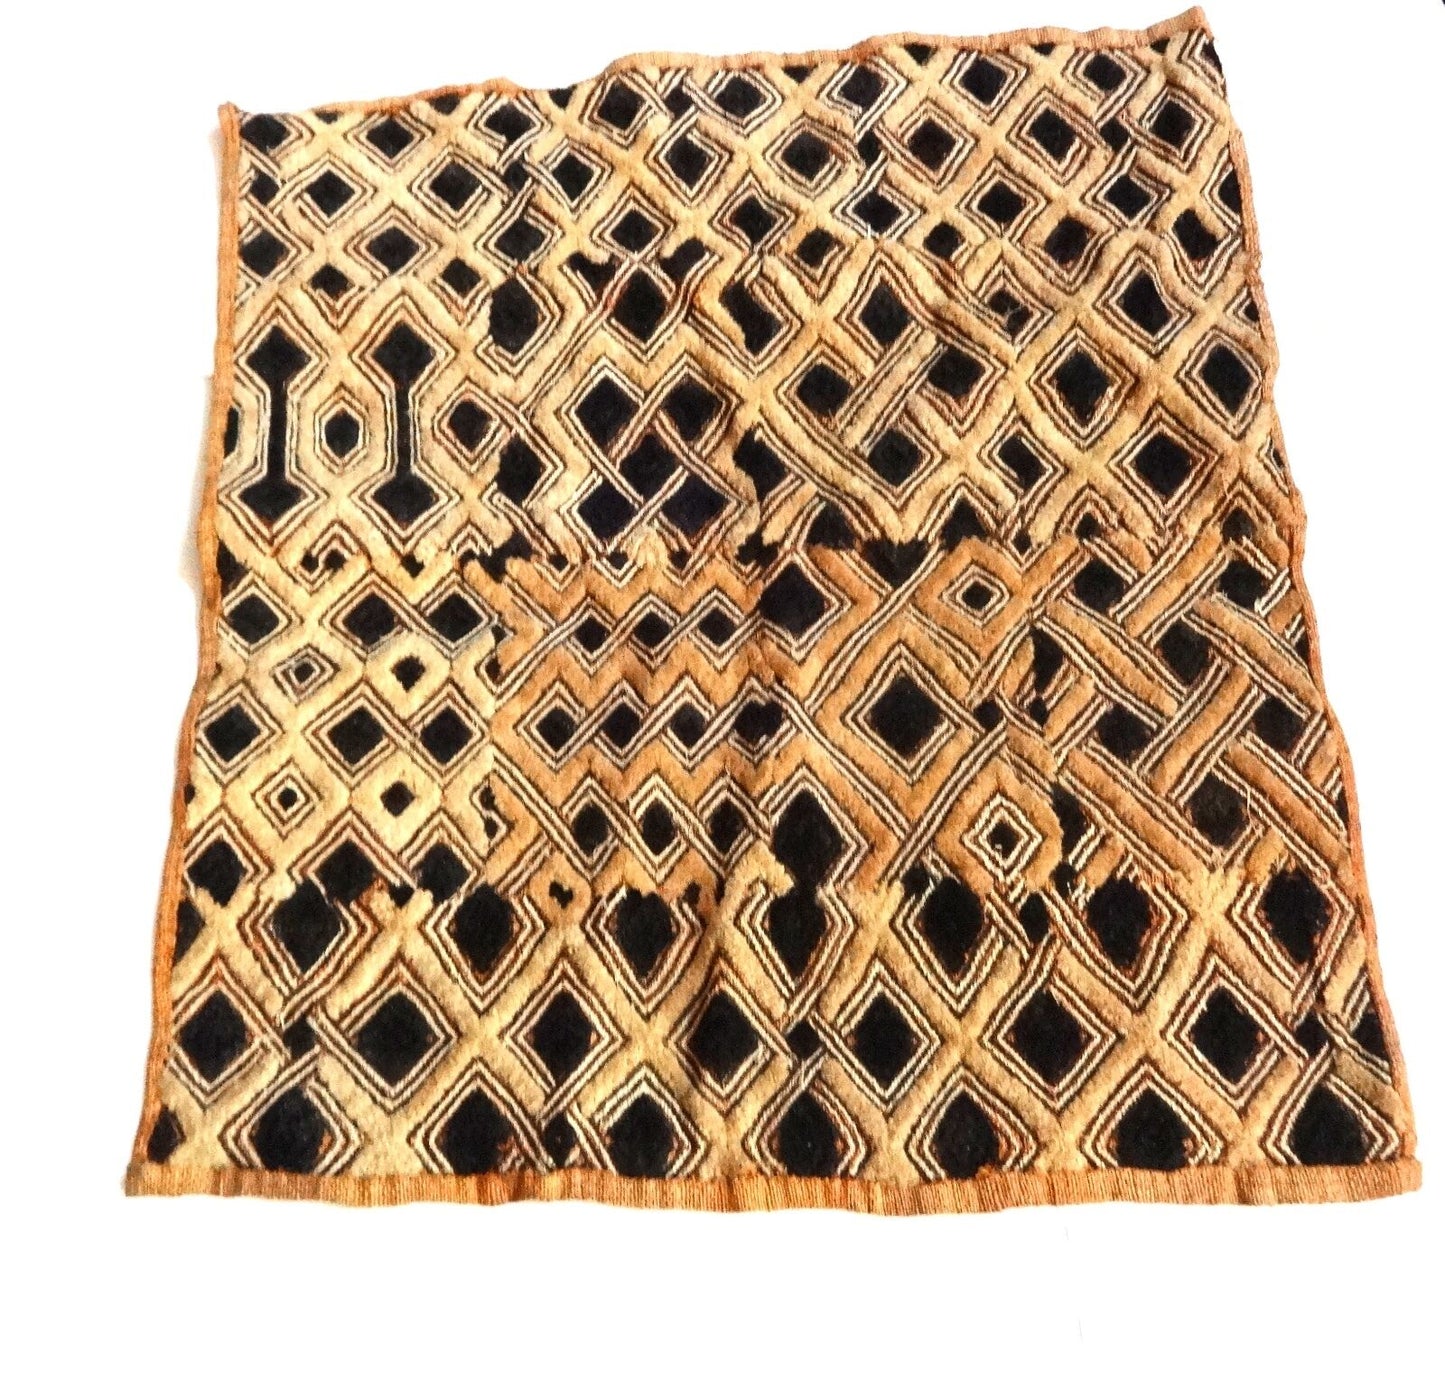 Superb LG Kuba Kasai Velvet Boutallah Raffia Textile , Zaire Africa 26.5" by 24"